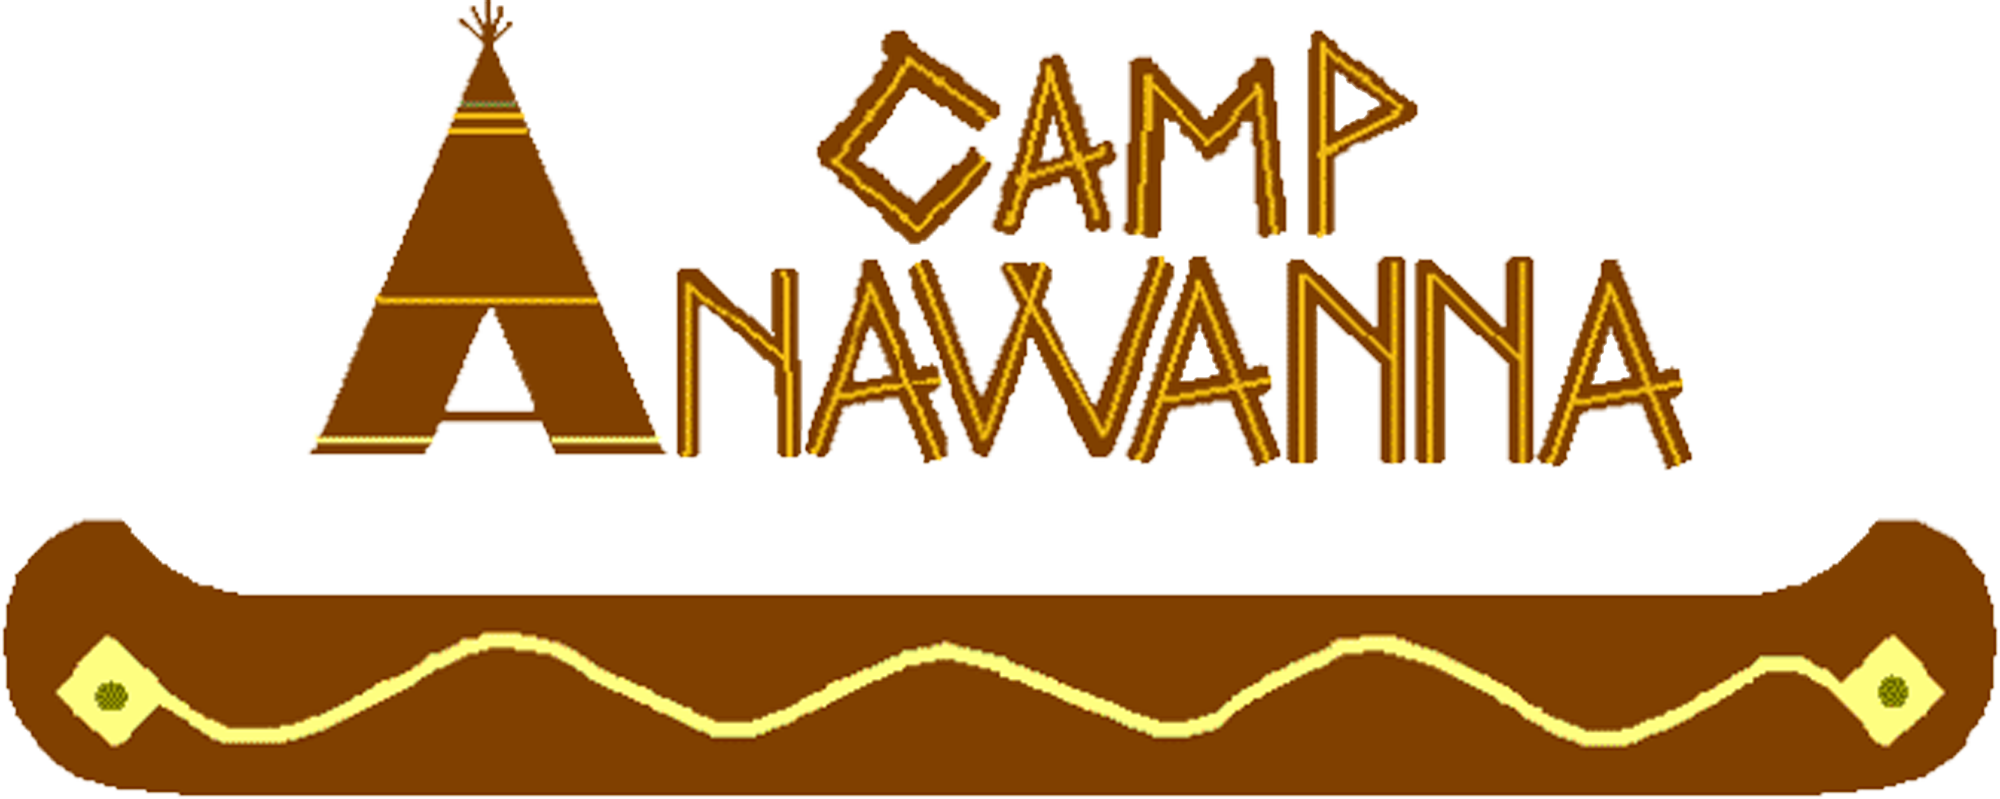 Download The Following Camp Anawanna T Shirt Image - Camp Anawanna (2000x799)